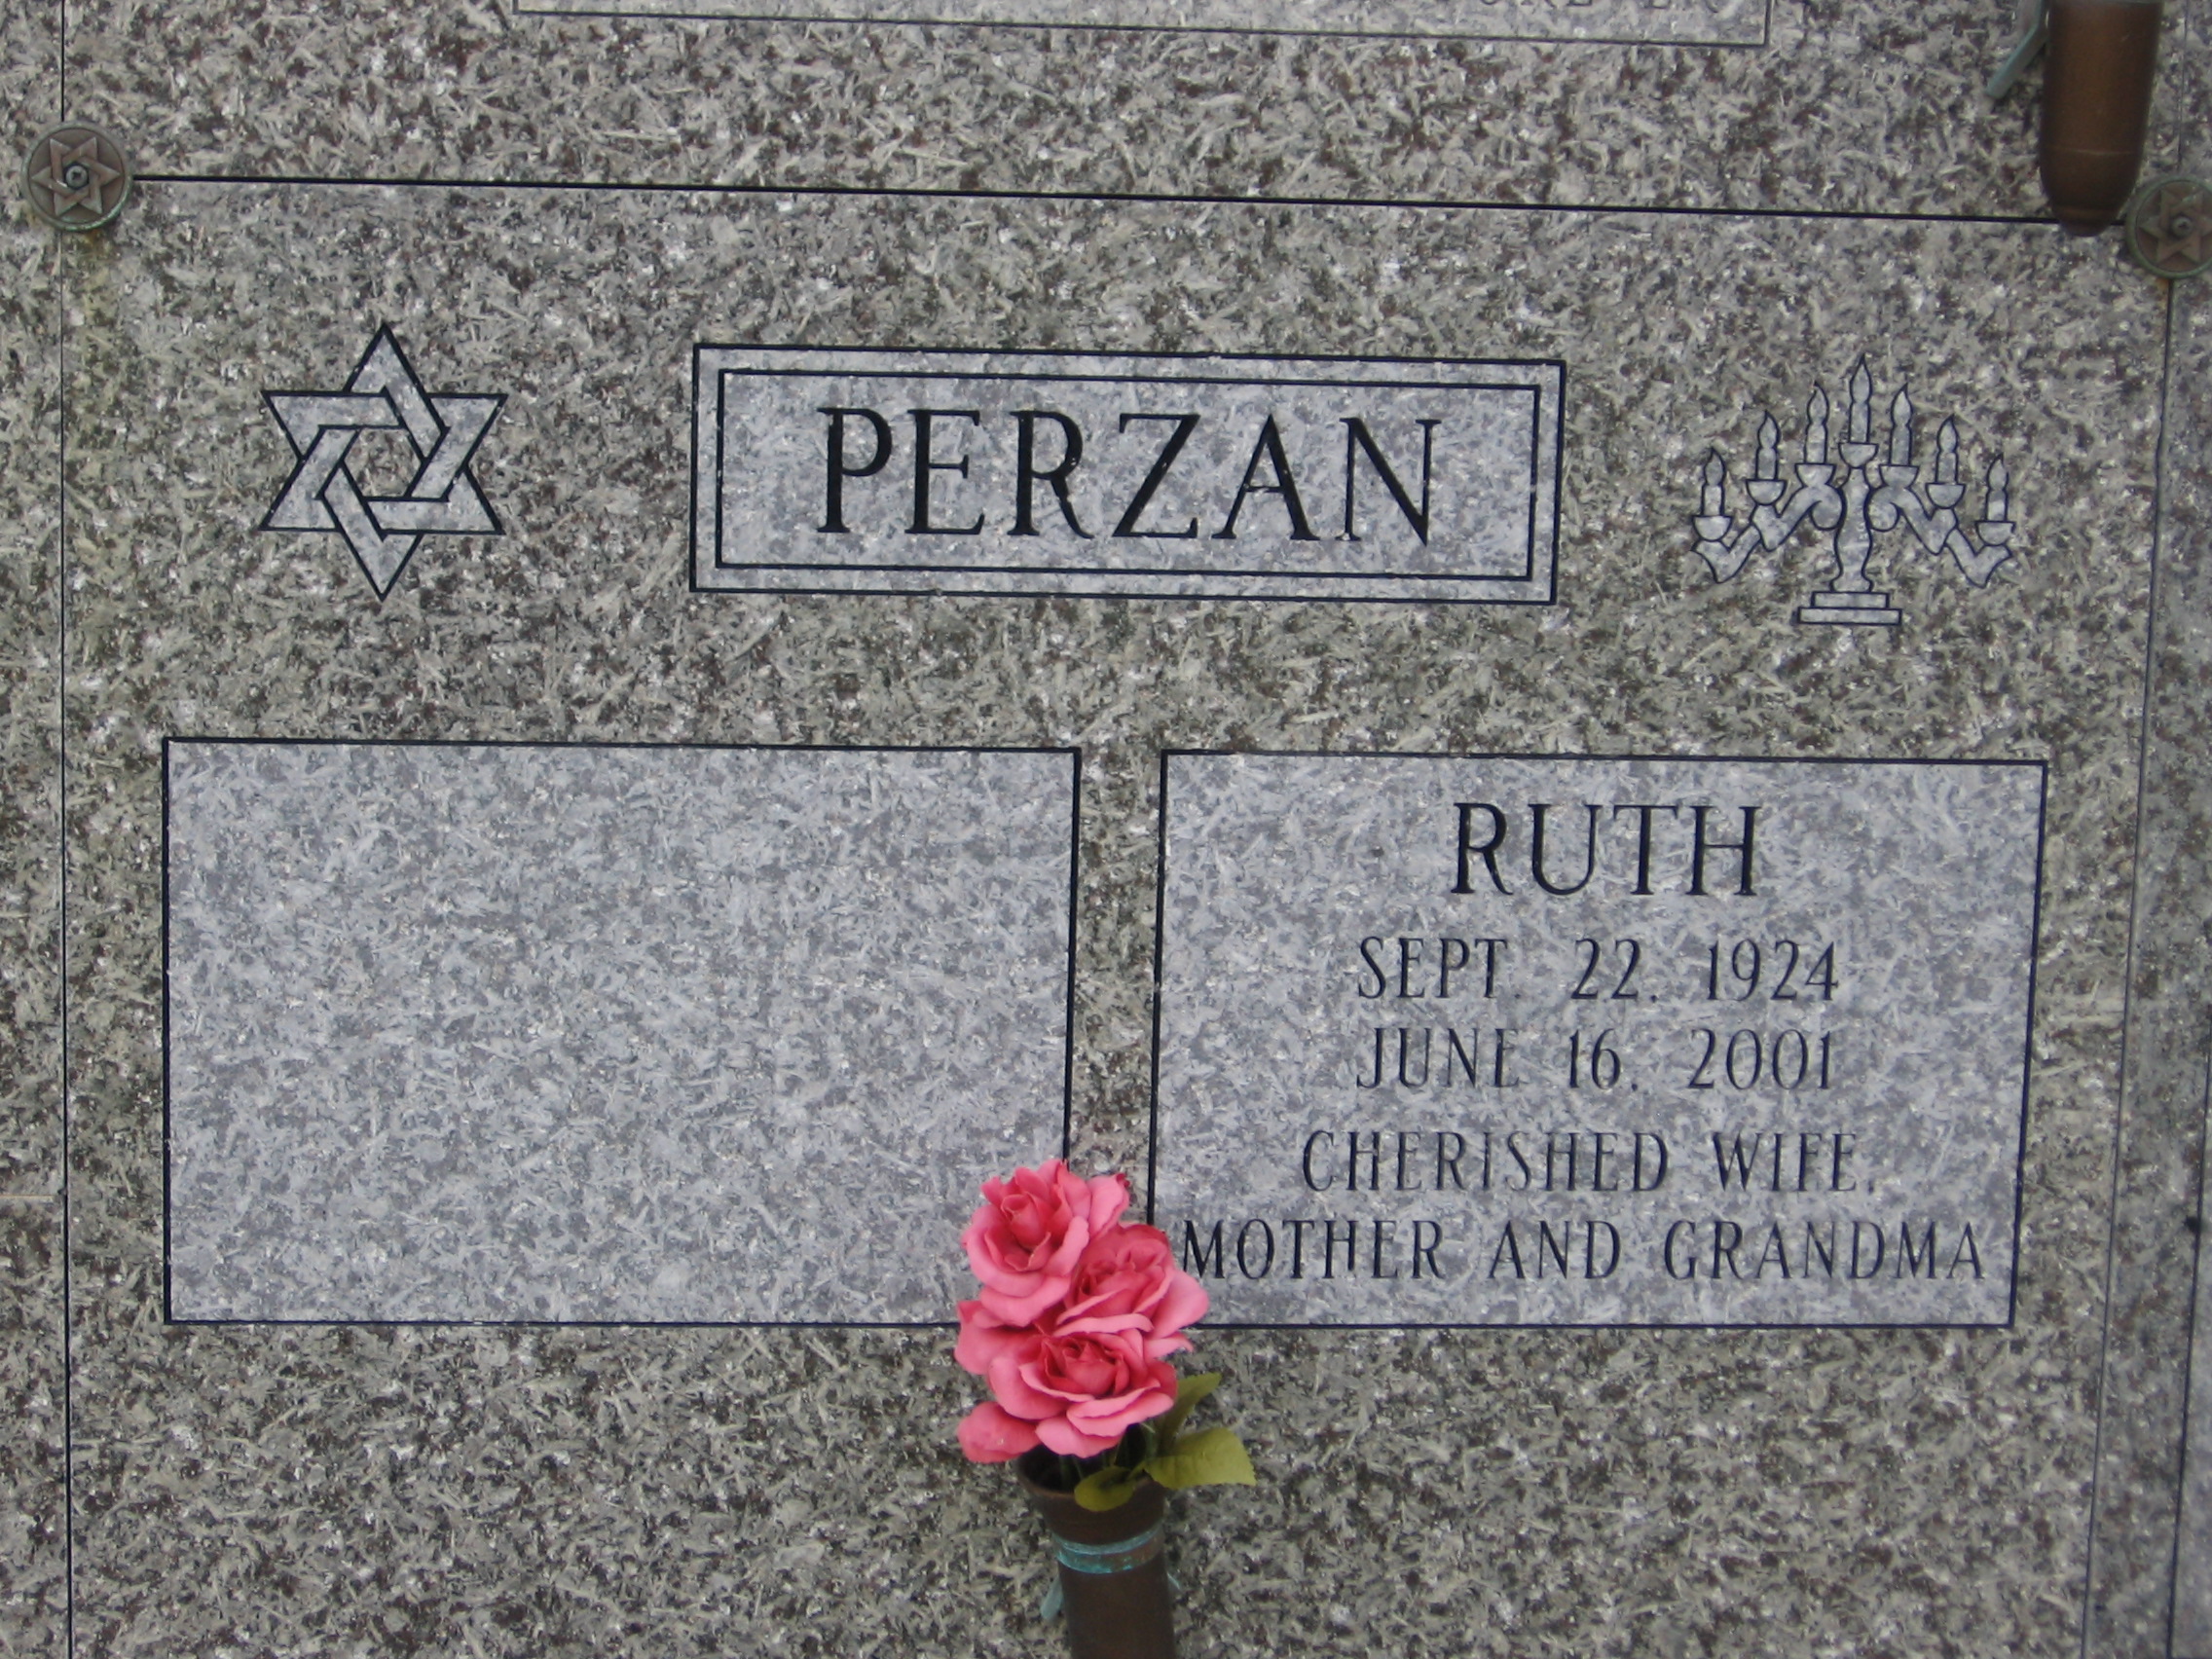 Ruth Perzan